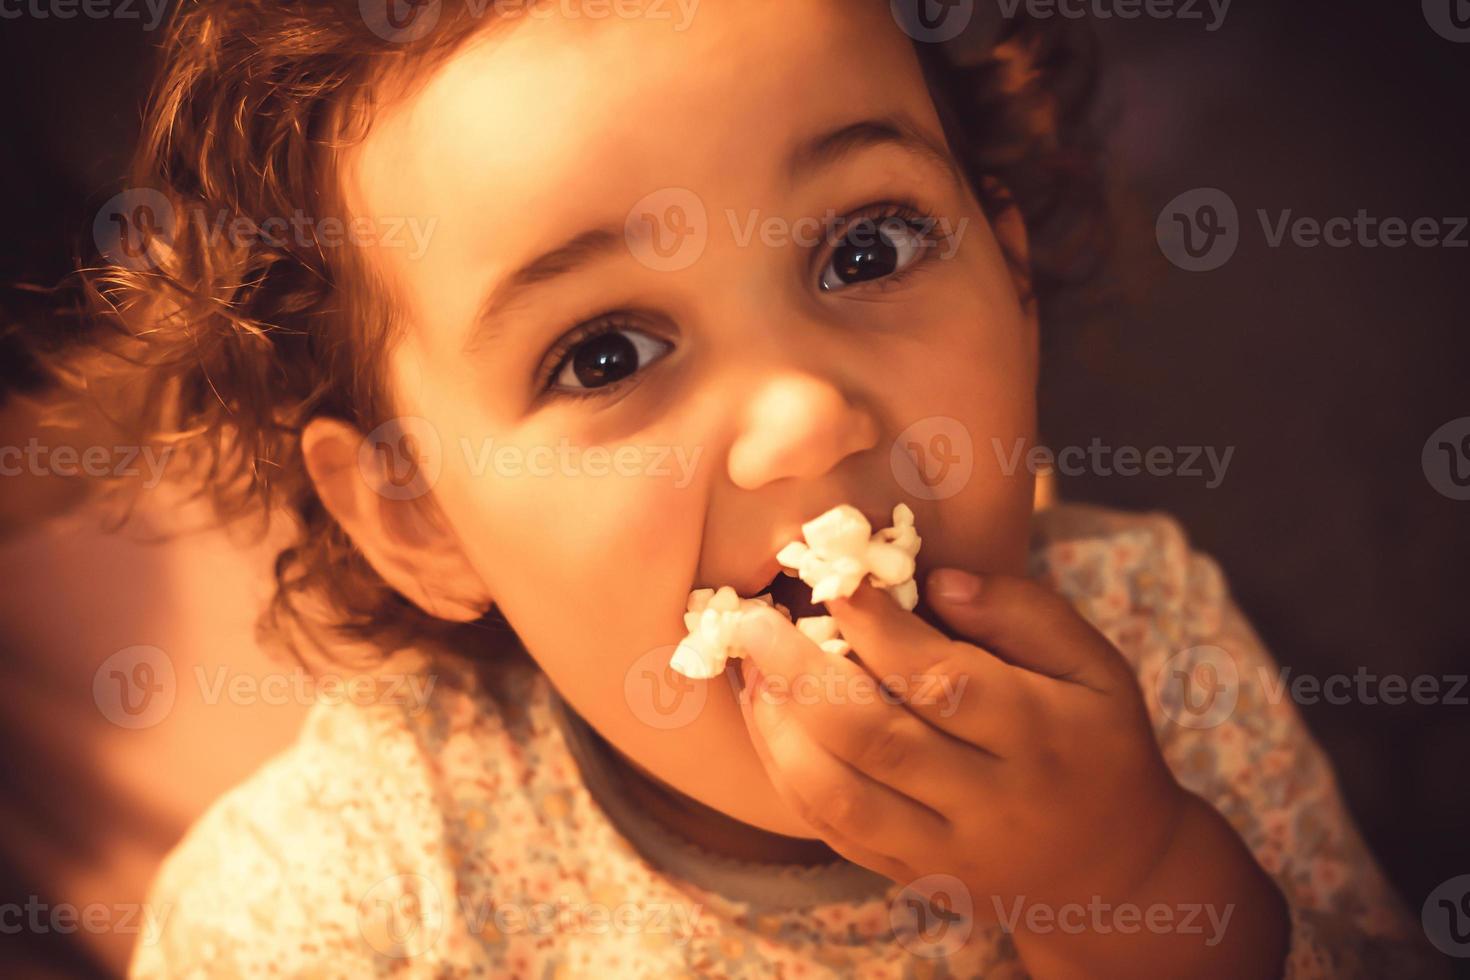 She really loves to eat popcorn. photo